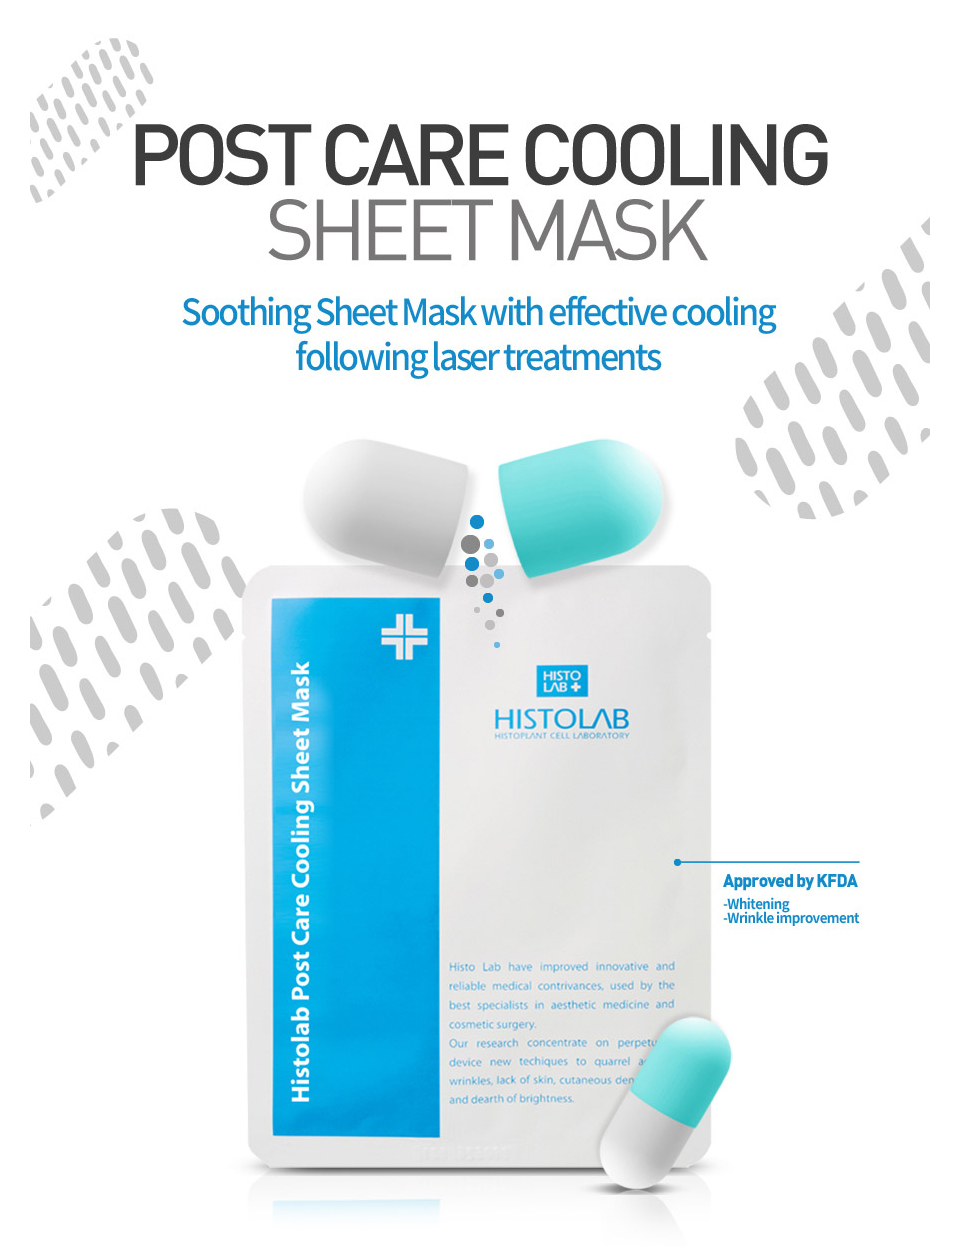 Cooling sheet mask